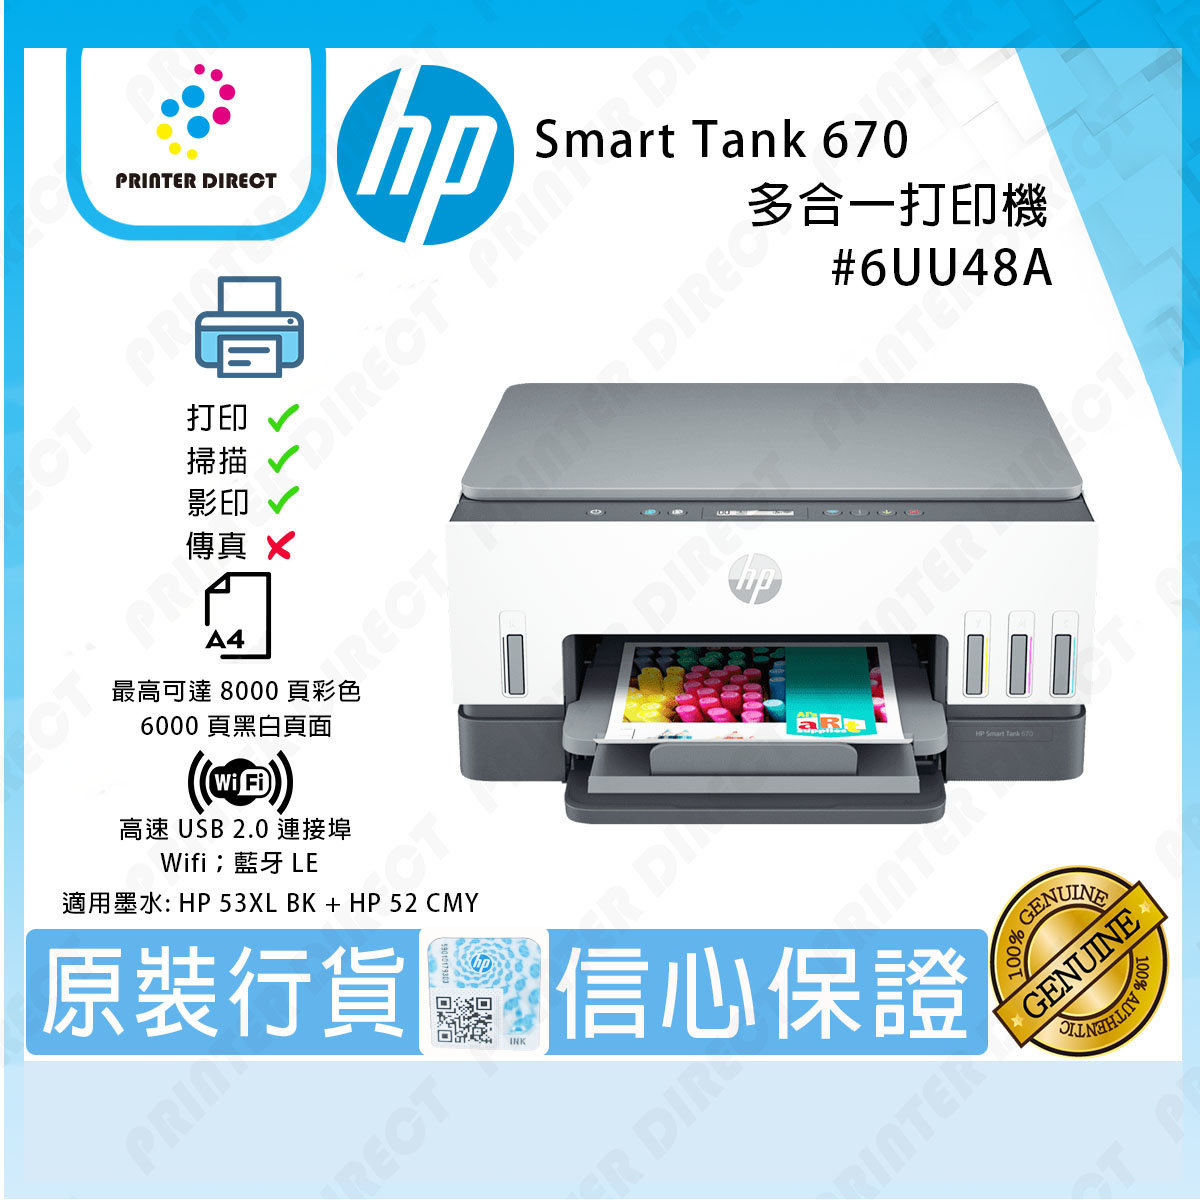 HP - Smart Tank 670 All-in-One (Print, scan, copy, WIFI) #6UU48A